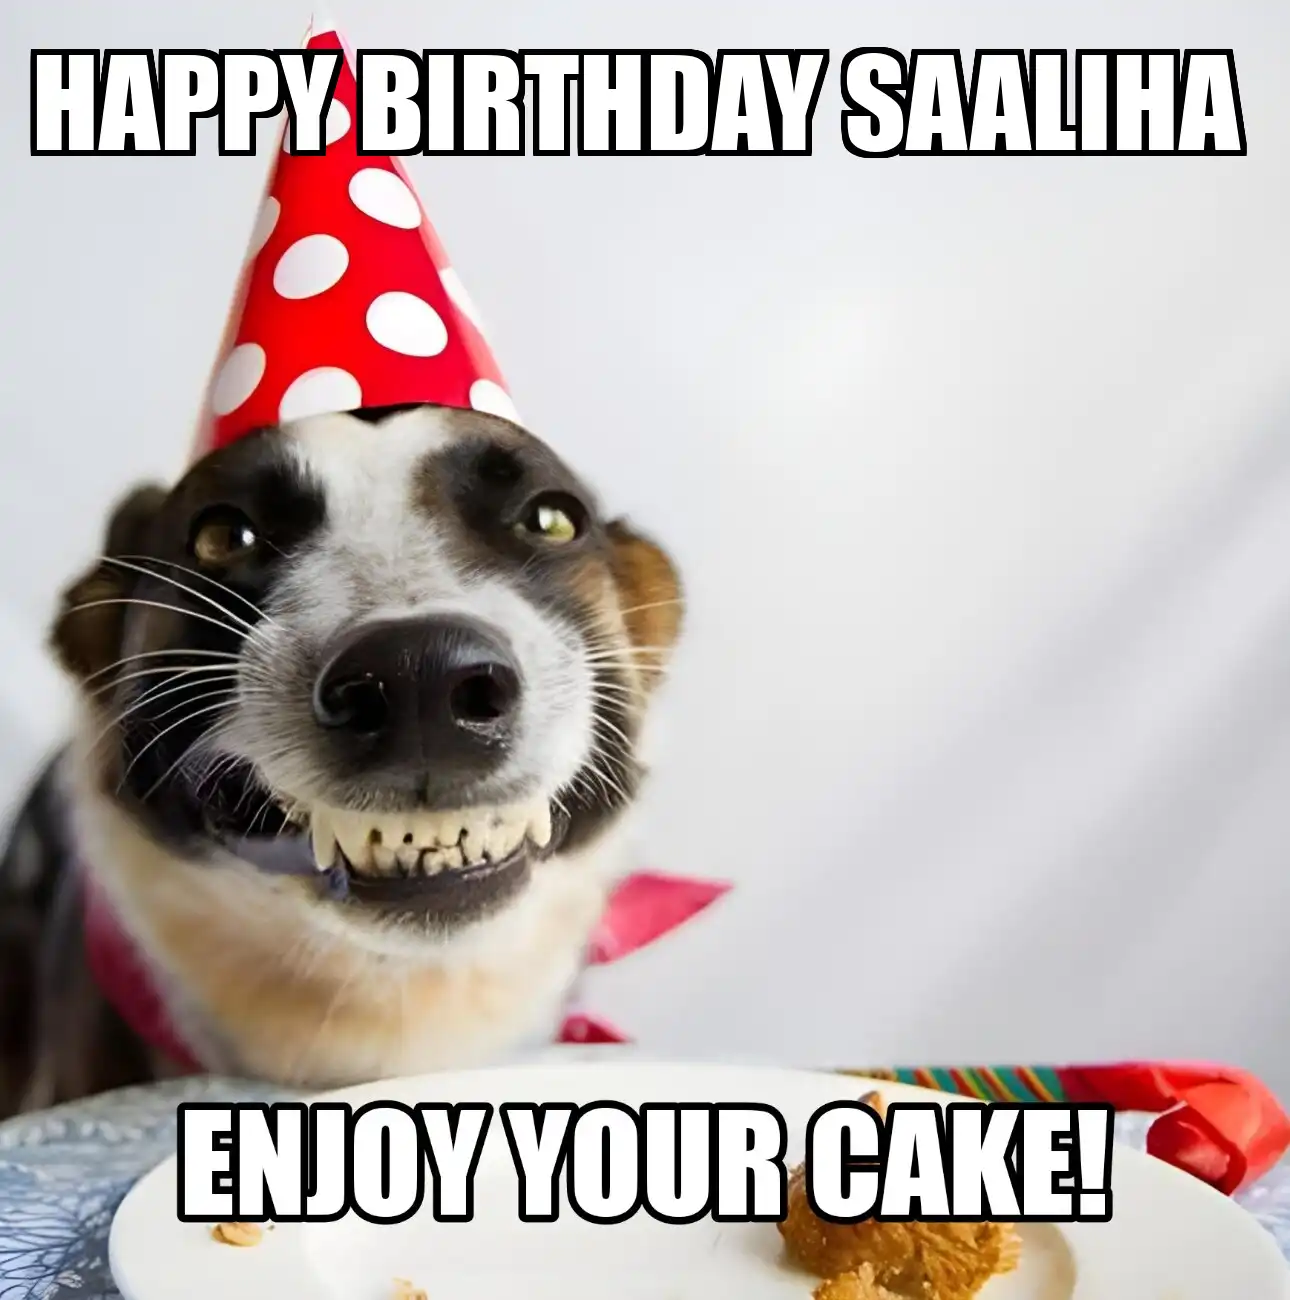 Happy Birthday Saaliha Enjoy Your Cake Dog Meme